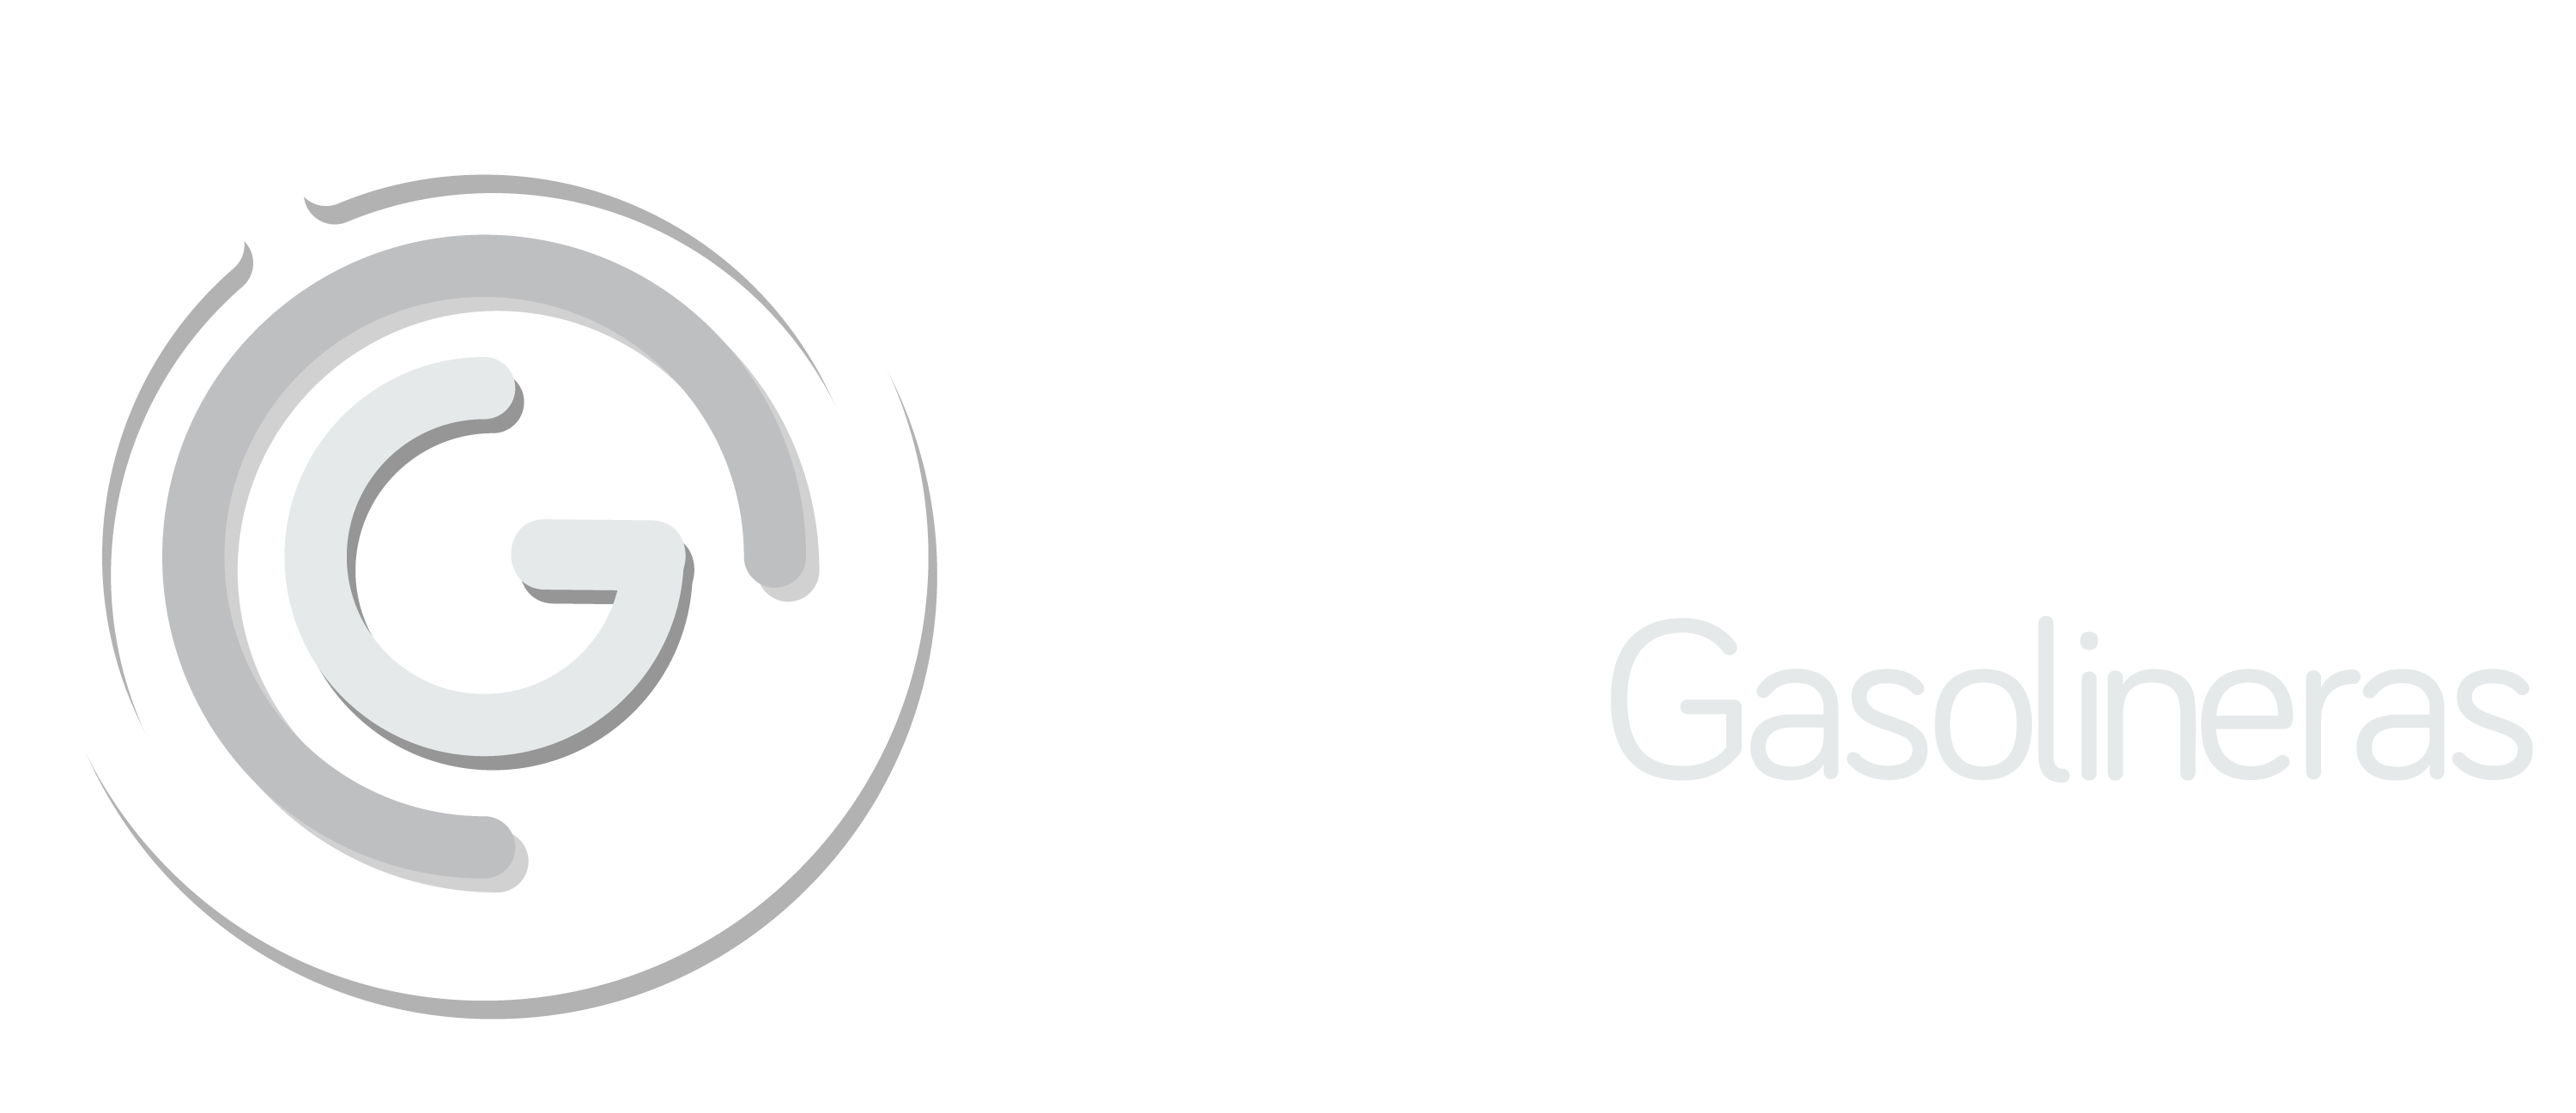 Go Trade Hub Logo